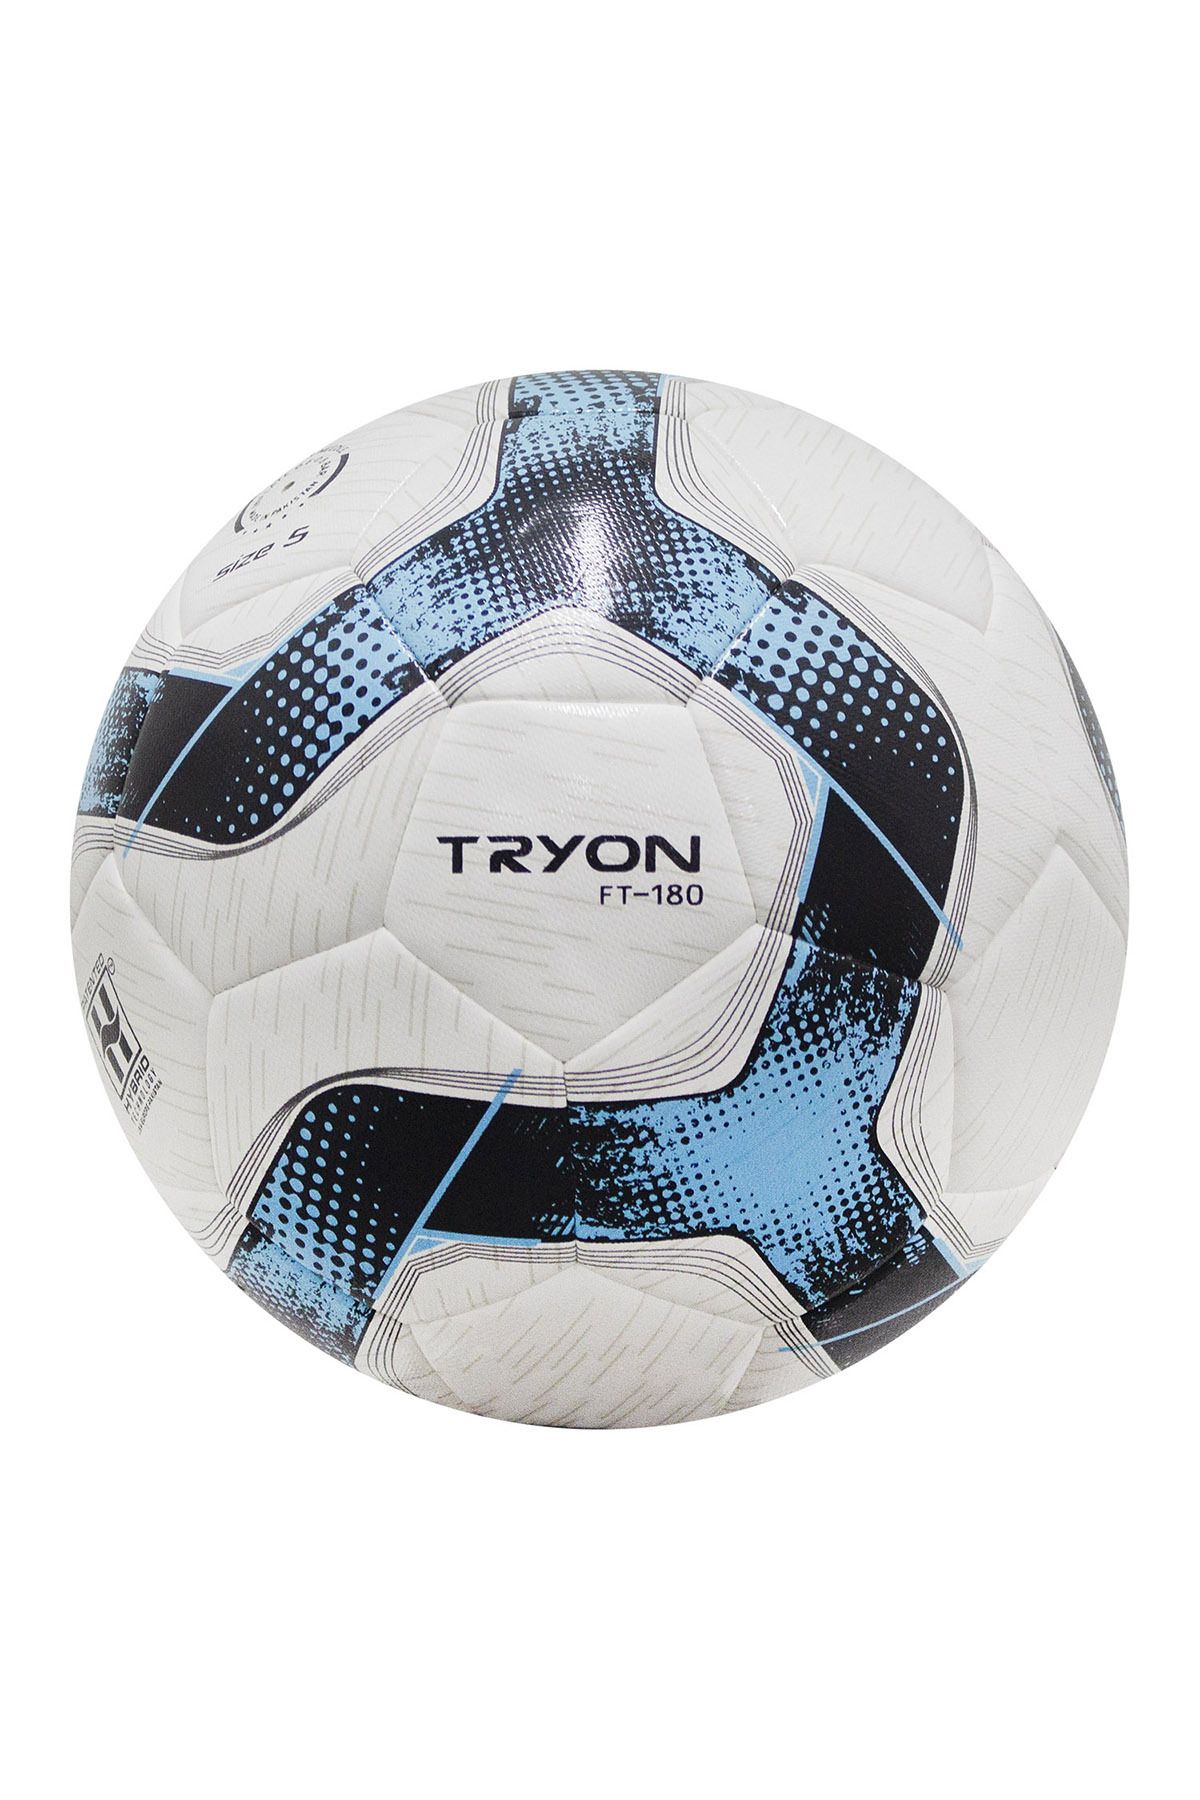 TRYON Futbol Topu FT-180 5No